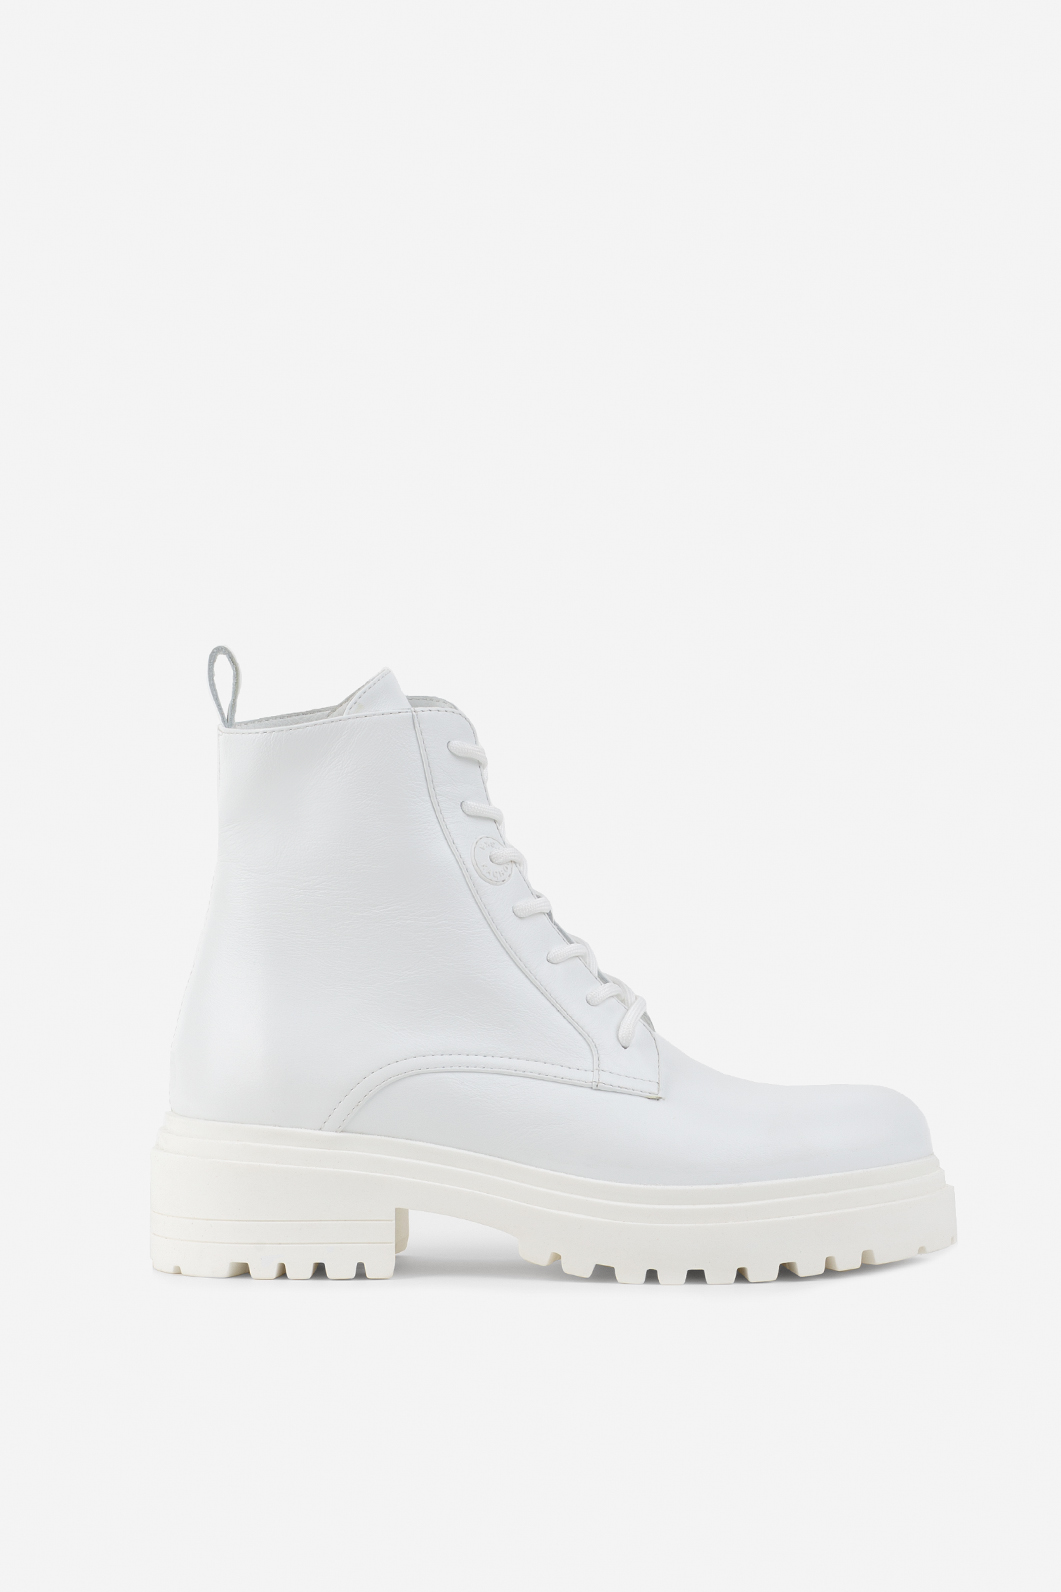 Crush white leather 
platform boots /fur/